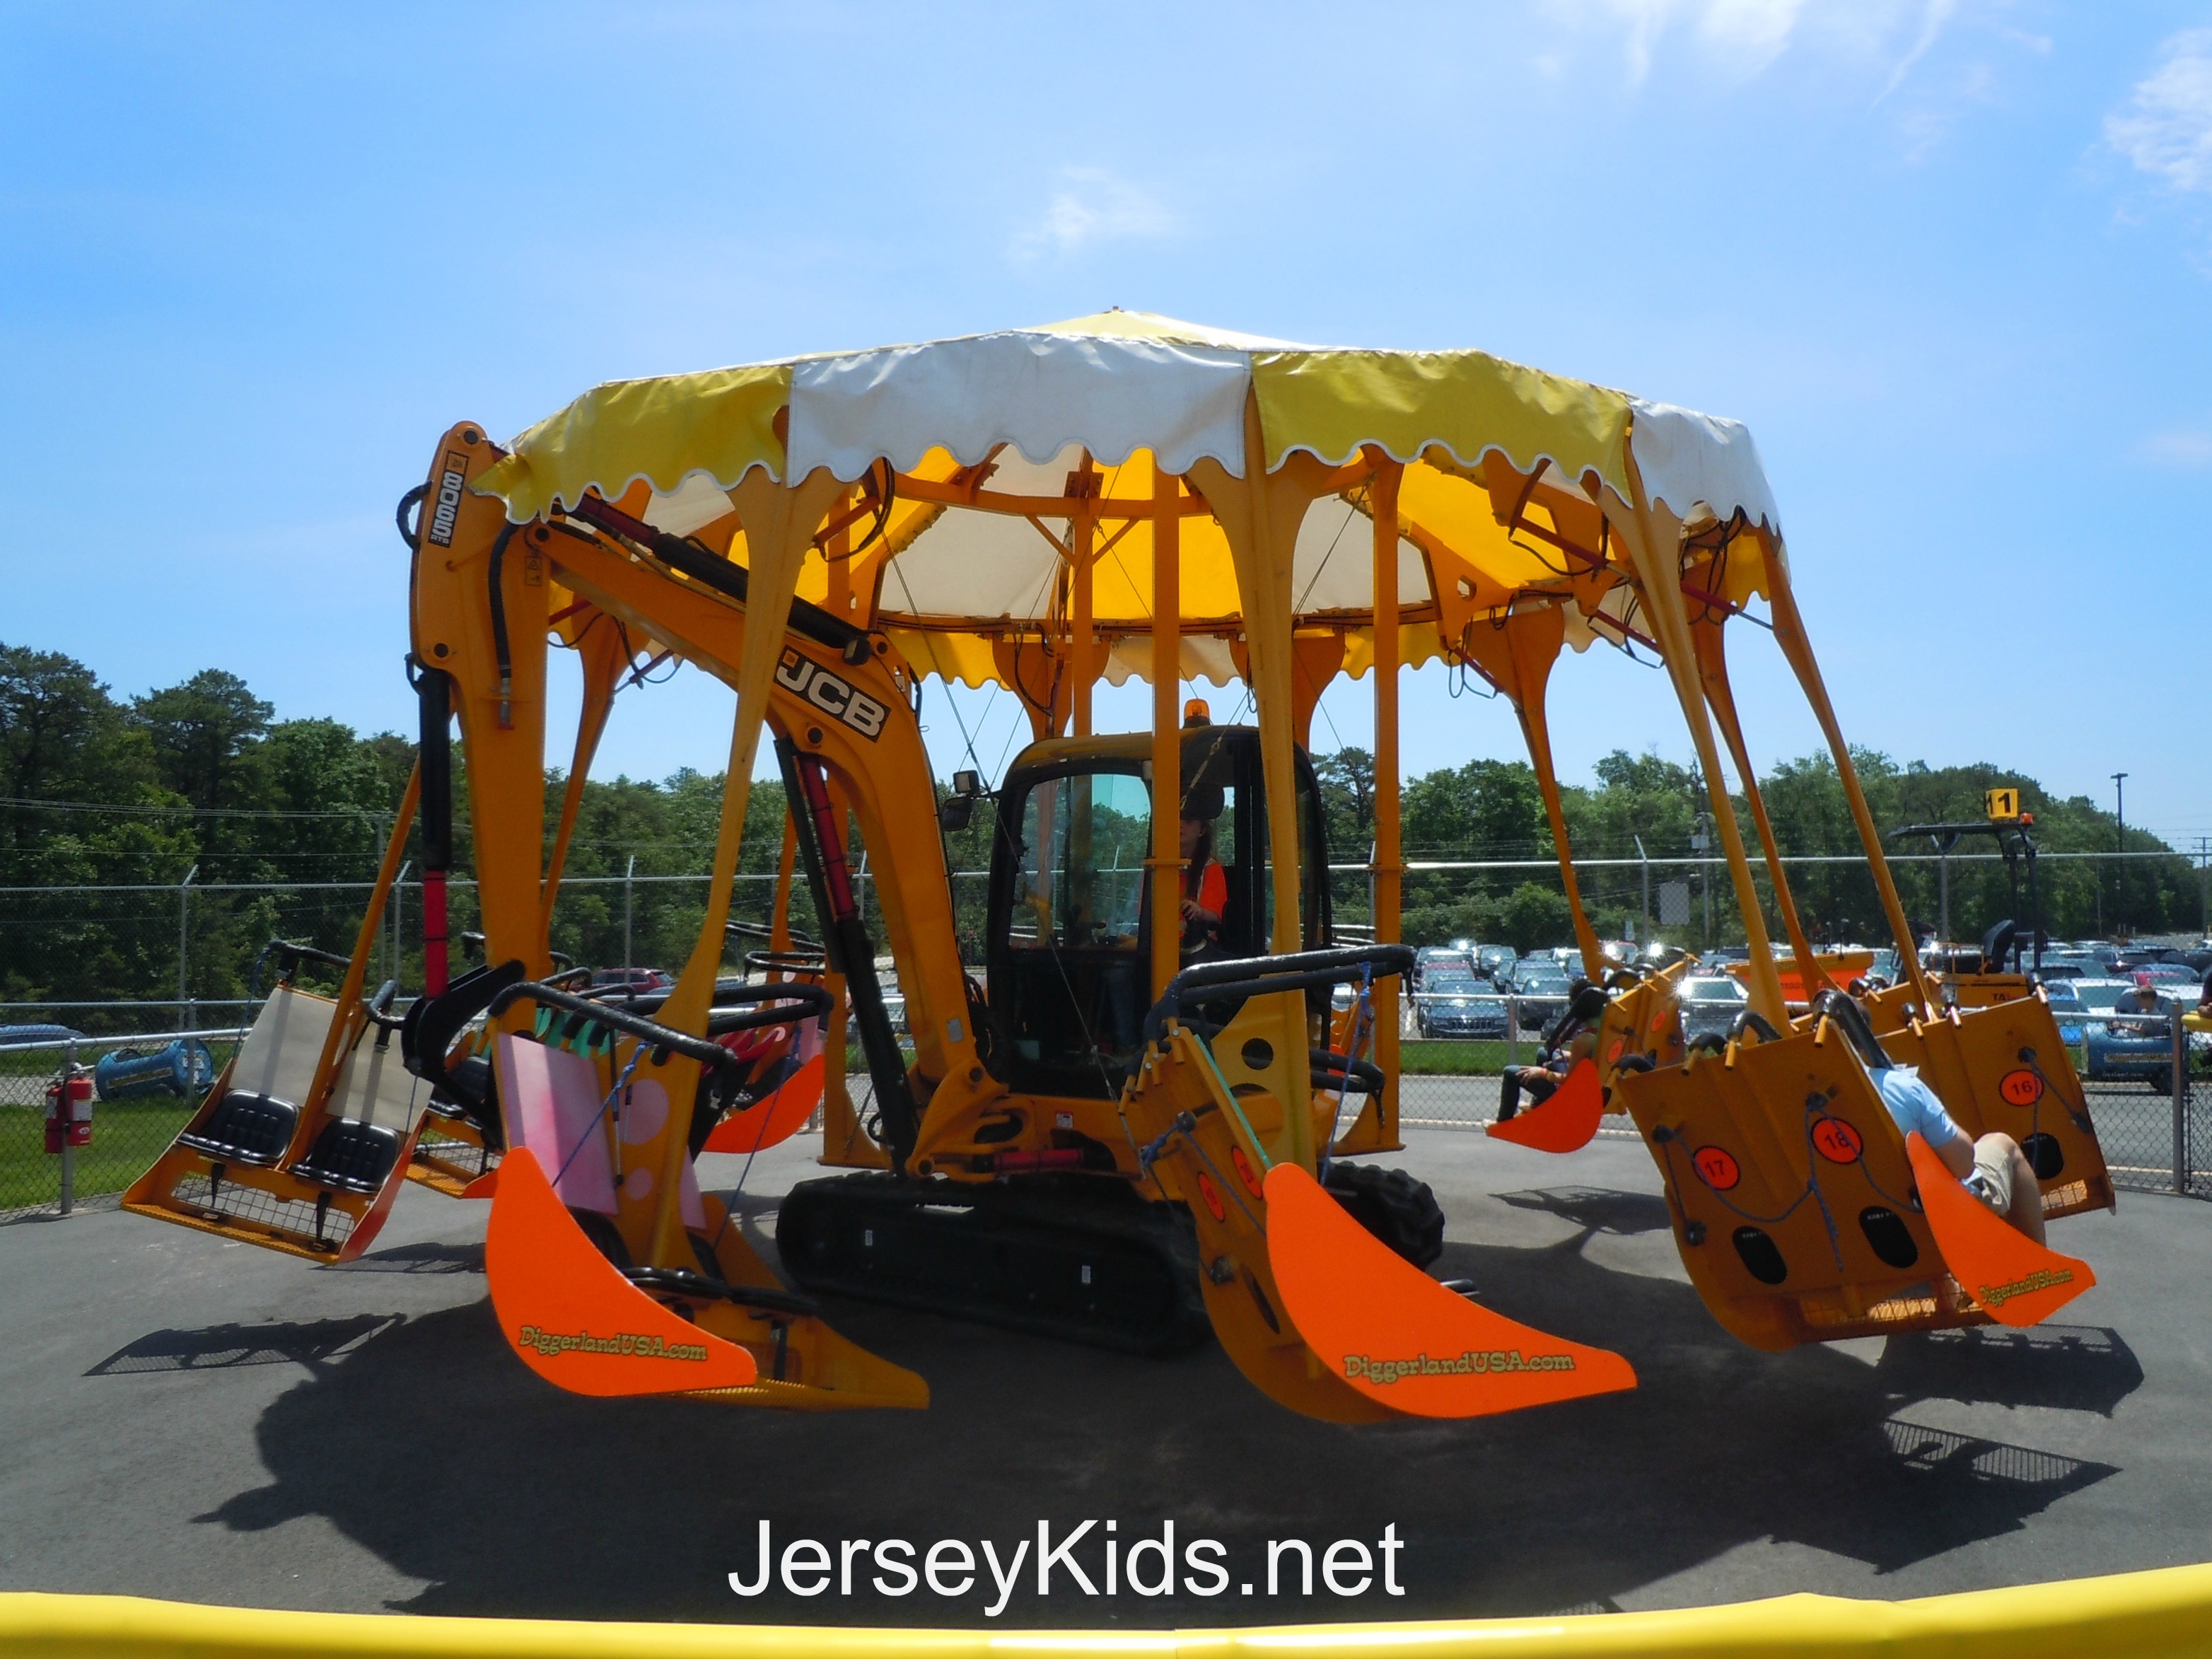 Review: Diggerland USA - Jersey Kids3128 x 2346